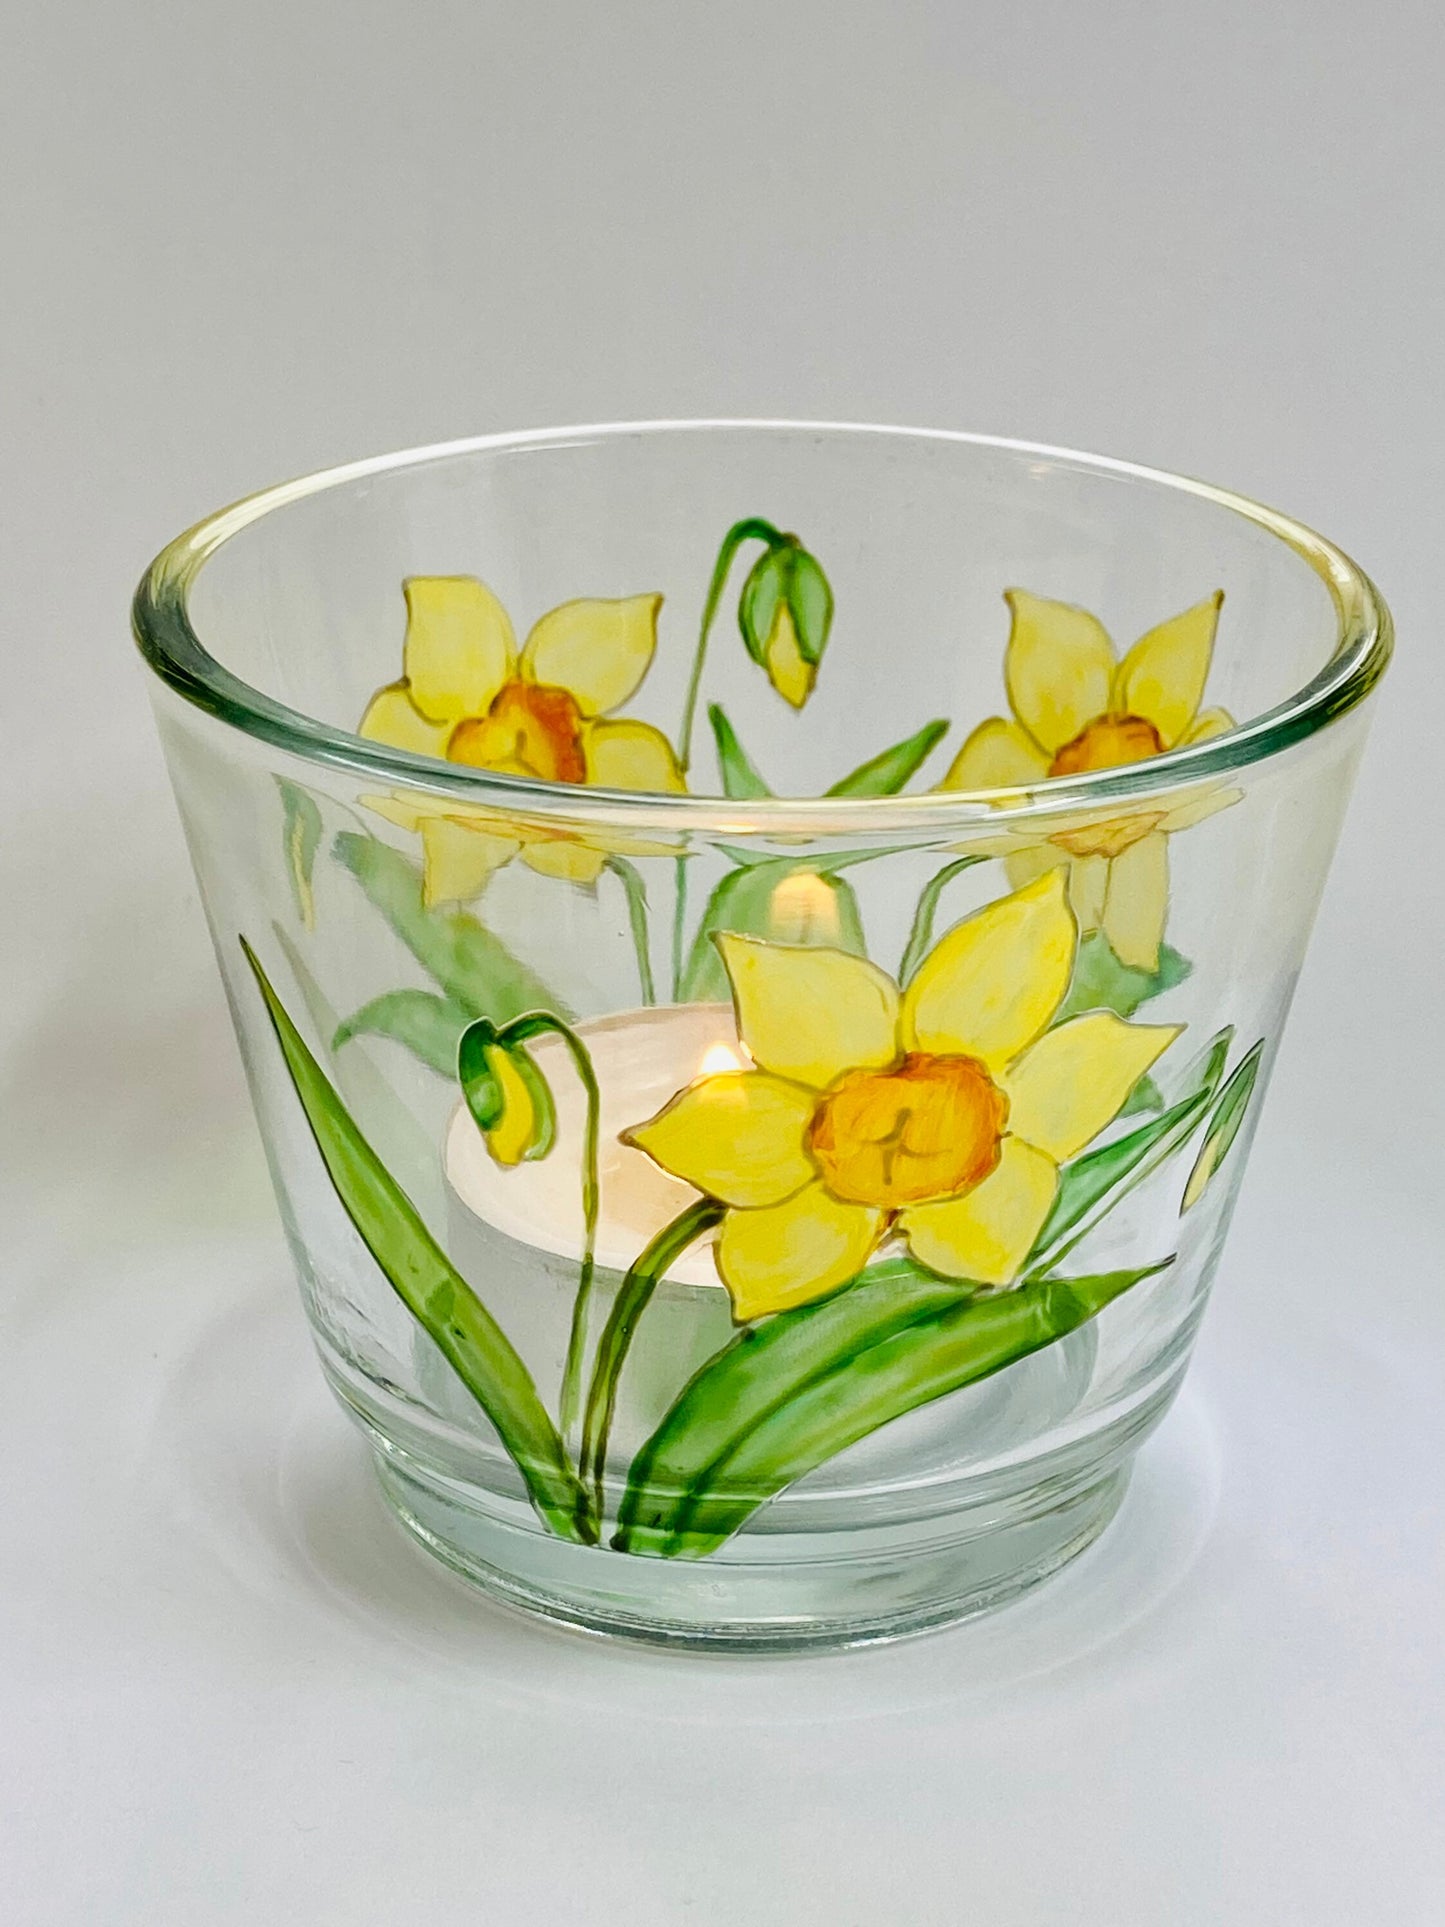 Daffodils Narcissi design tealight holder